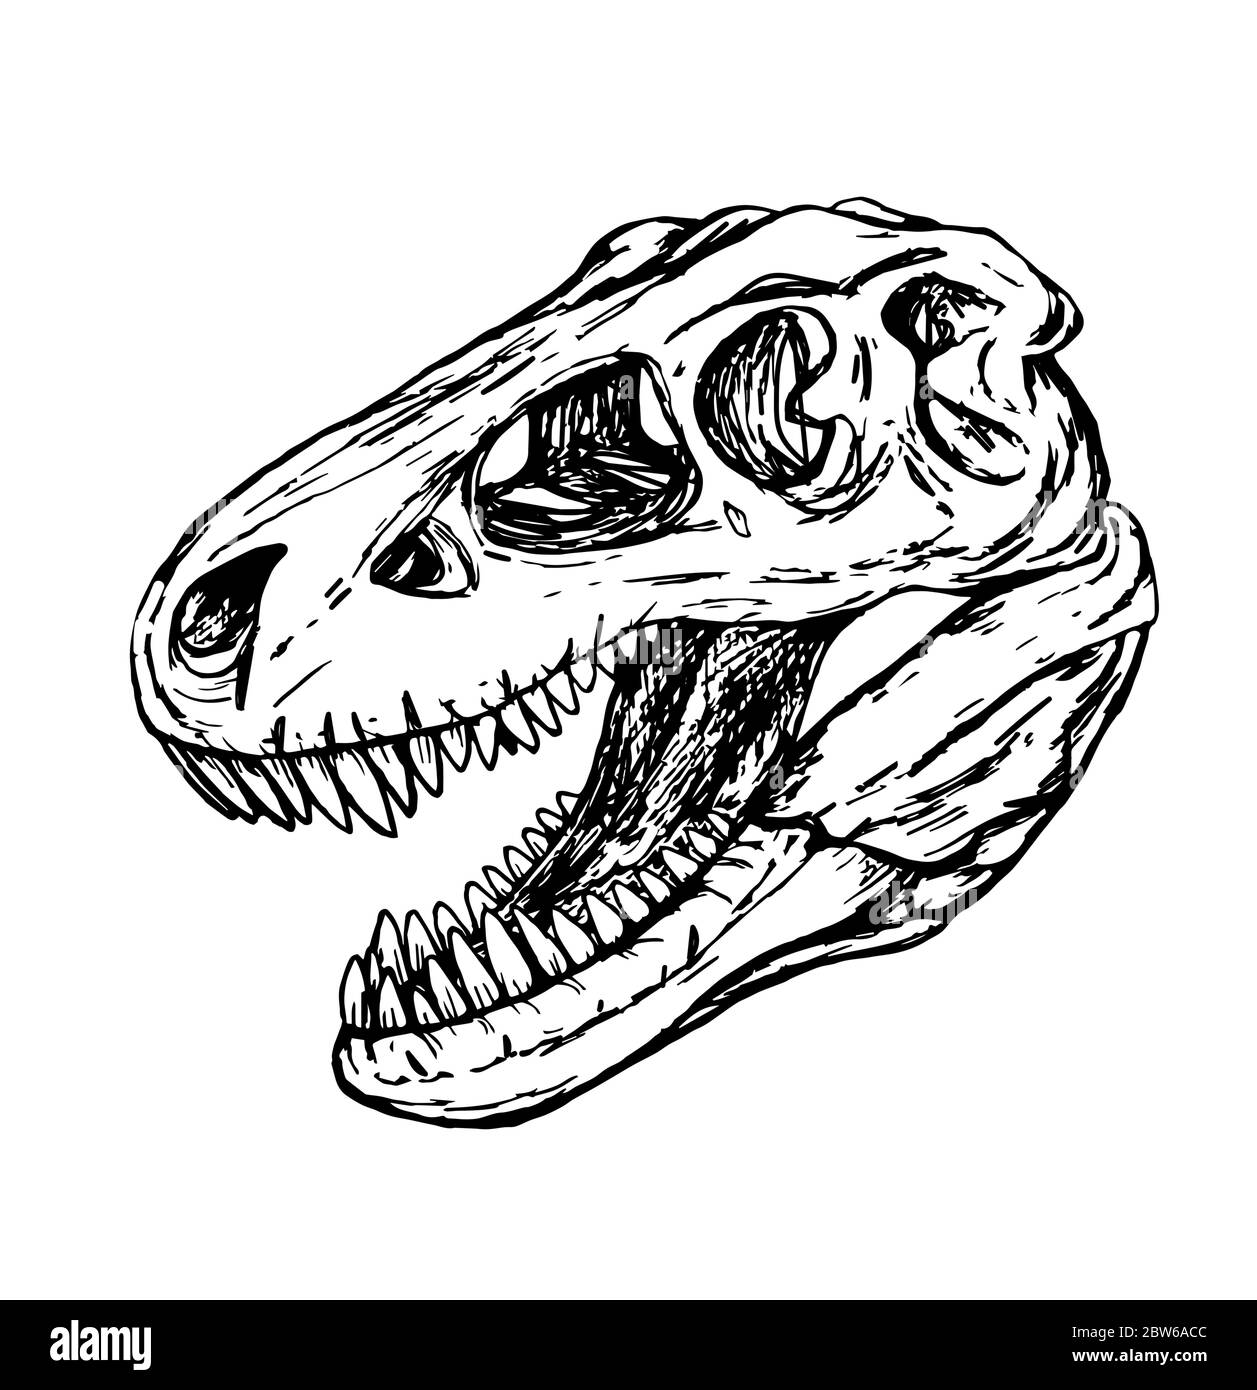 dinosaur head of turex skull illustration for design and decor Stock Photo